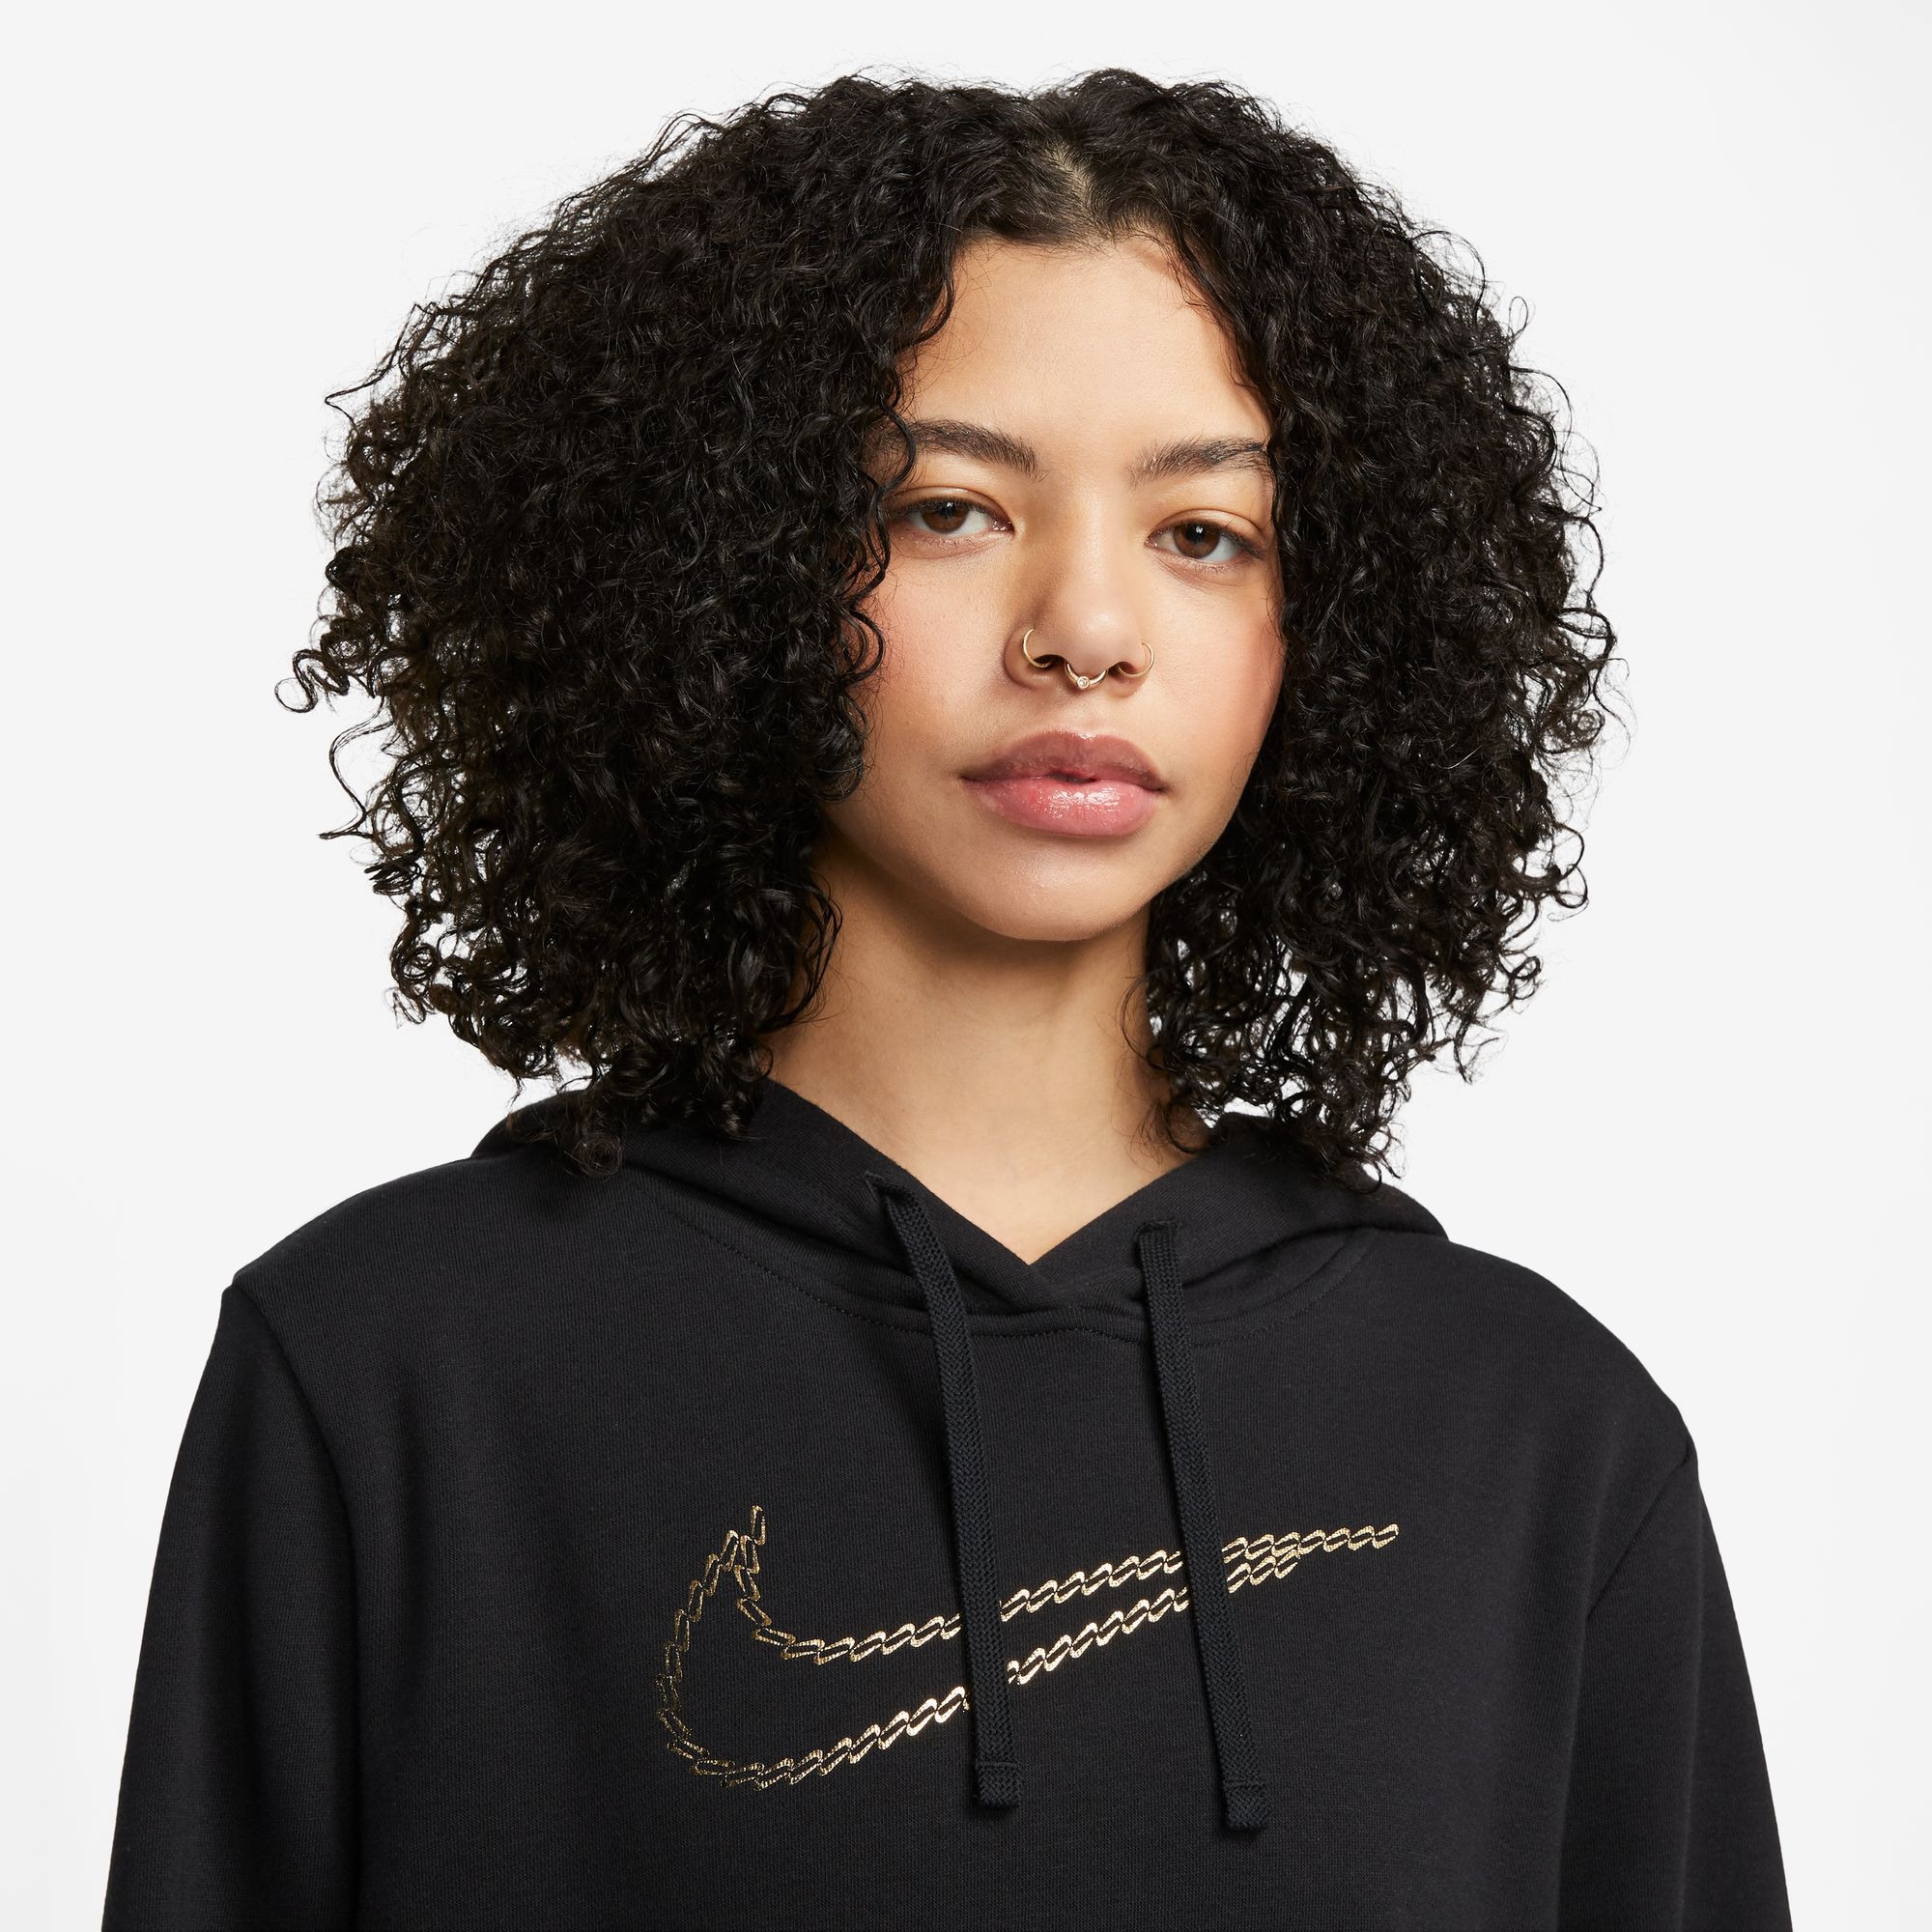 Nike Sportswear Kapuzensweatshirt »CLUB FLEECE PREMIUM ESSENTIAL WOMEN'S LOOSE SHINE PULLOVER HOODIE«